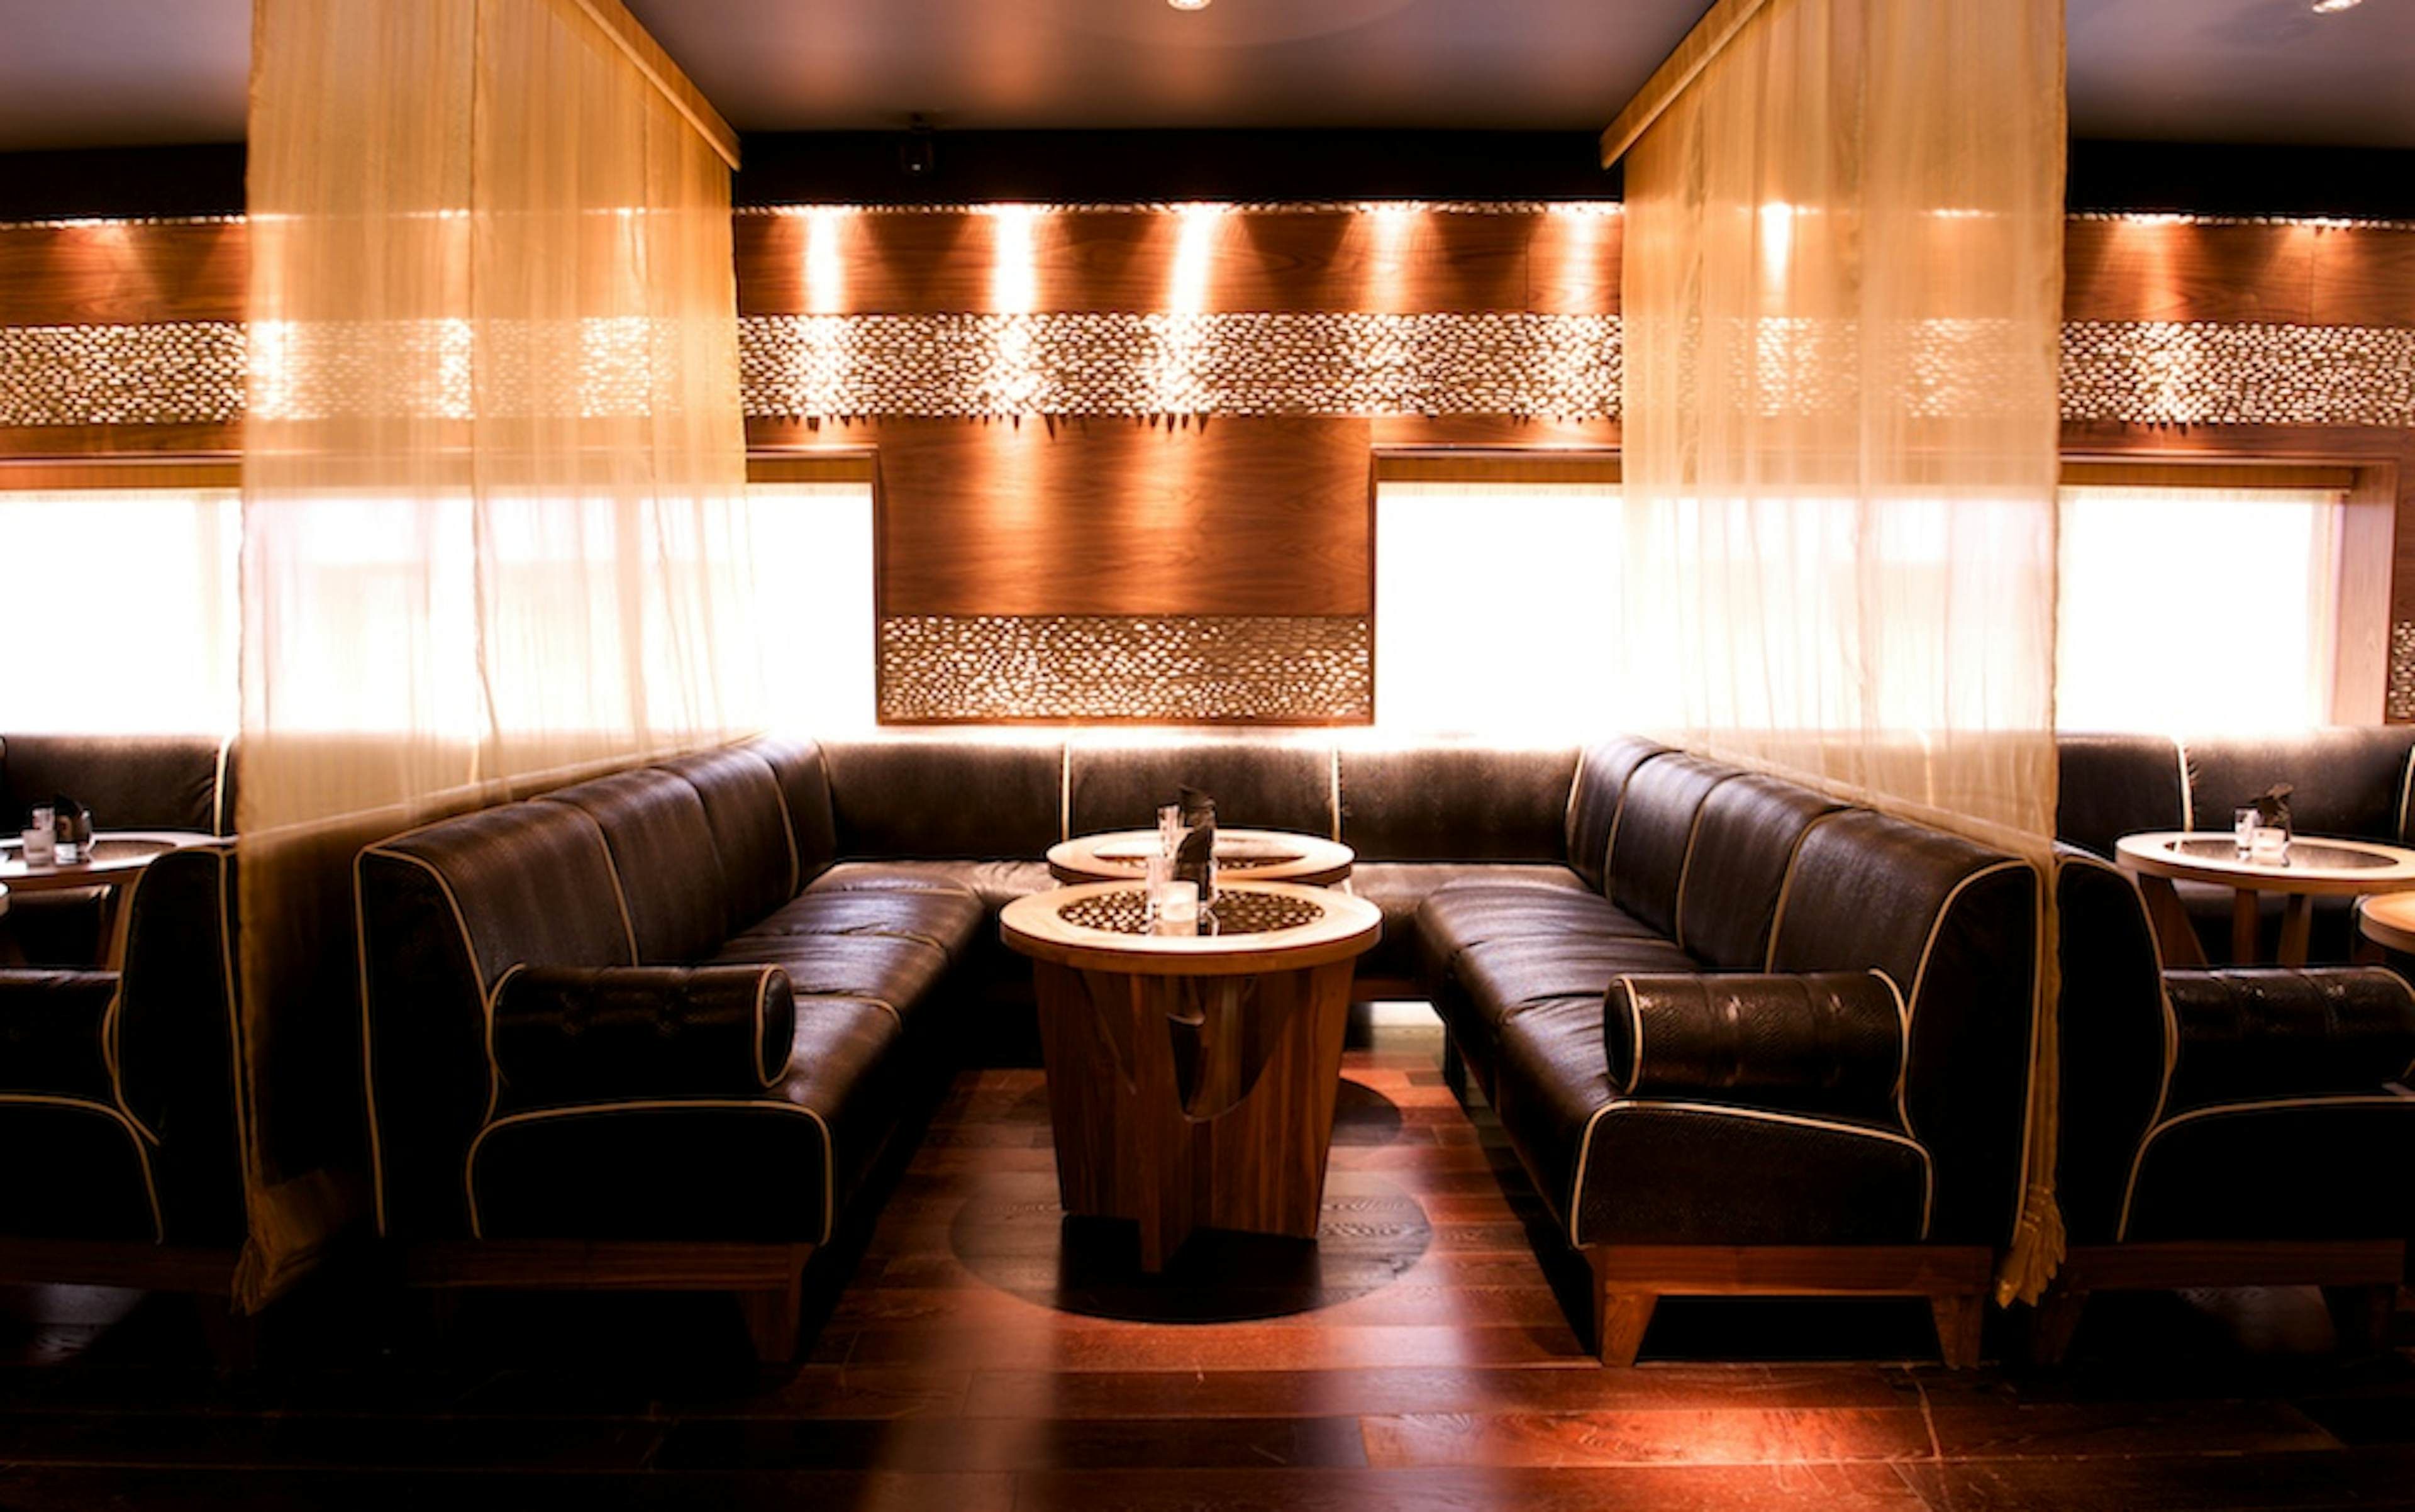 Mint Leaf Lounge - Mezzanine Bar image 1